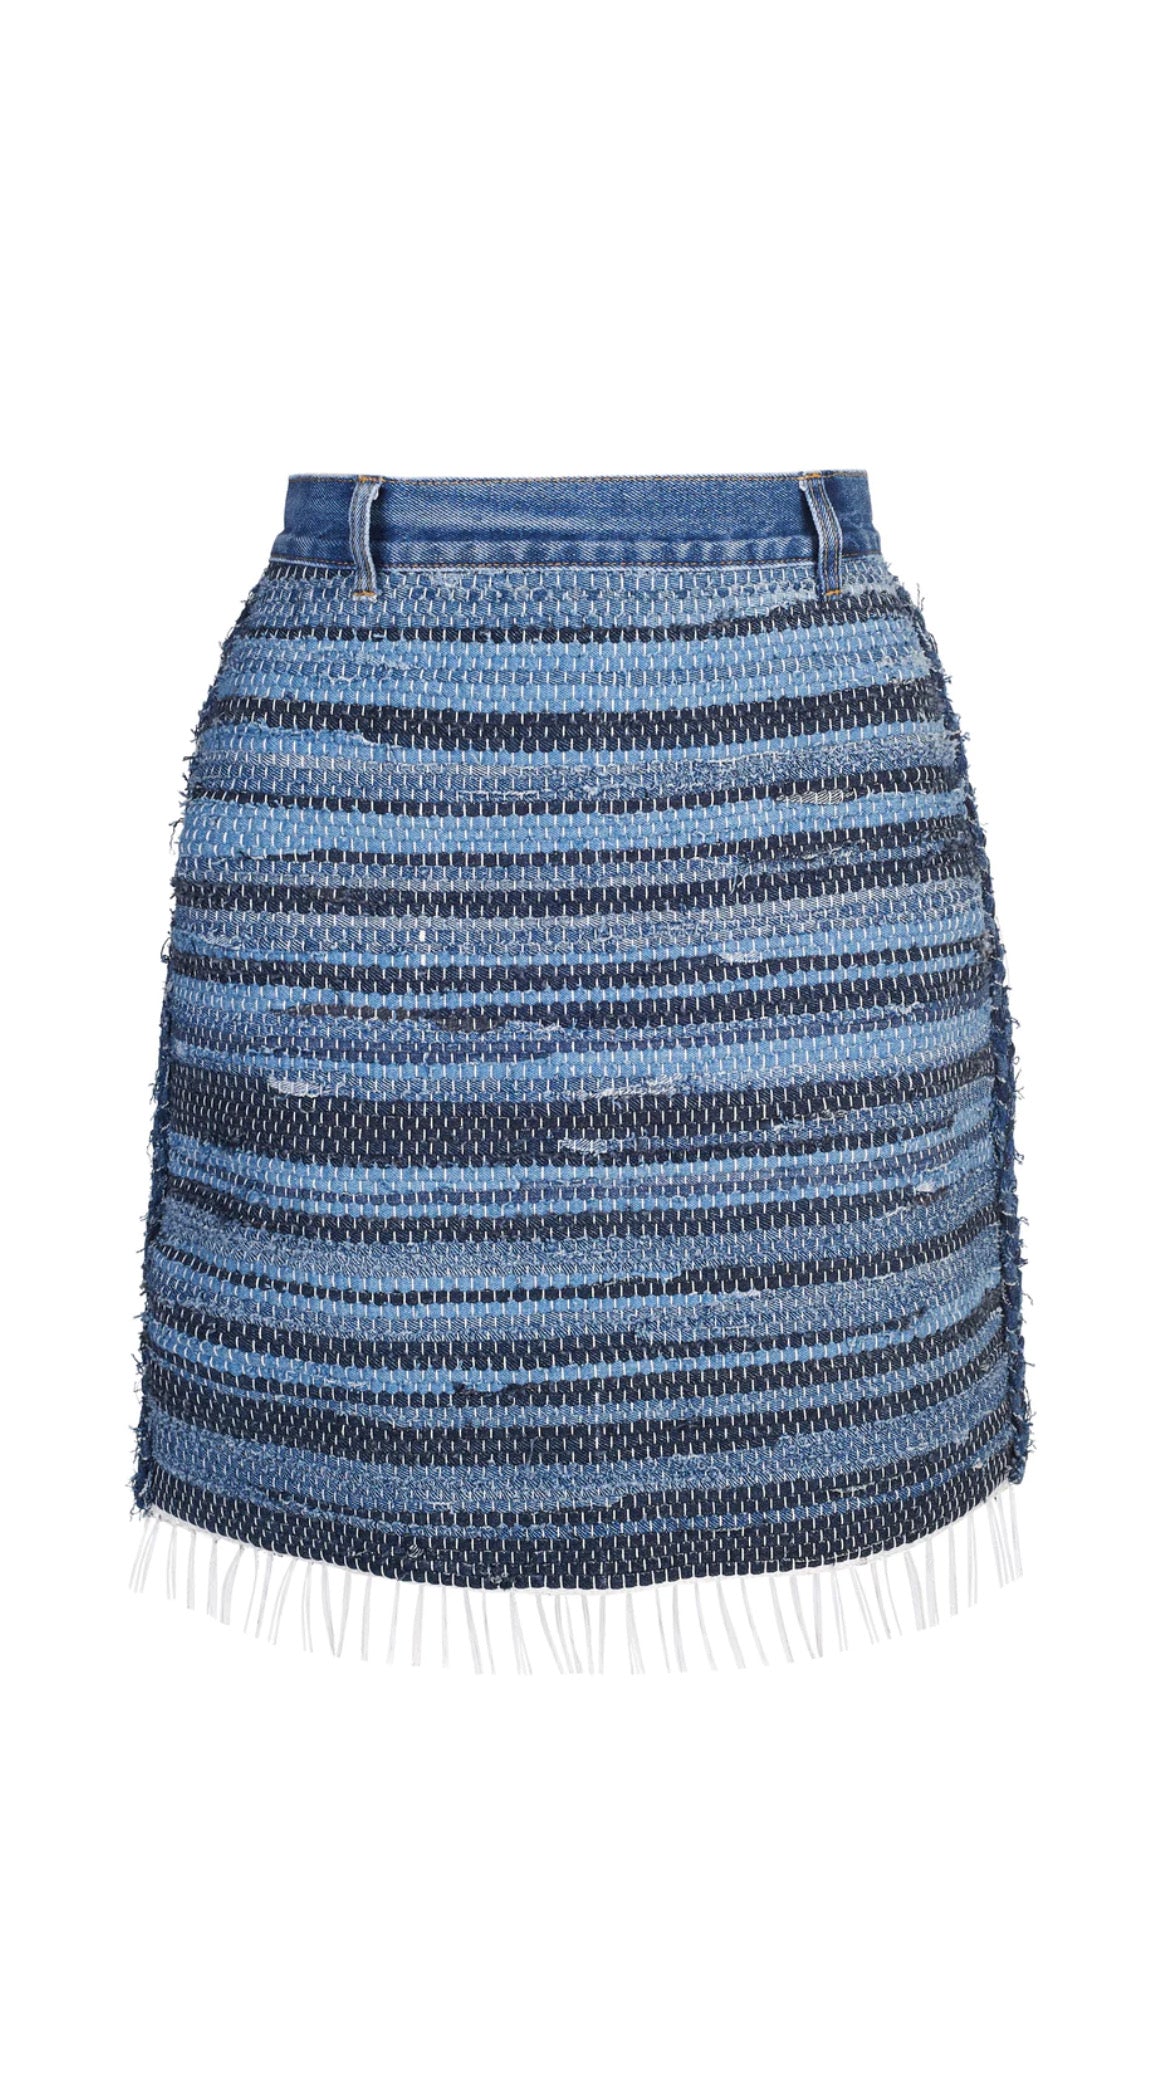 Zero-Waste Skirt in Rug Technique image